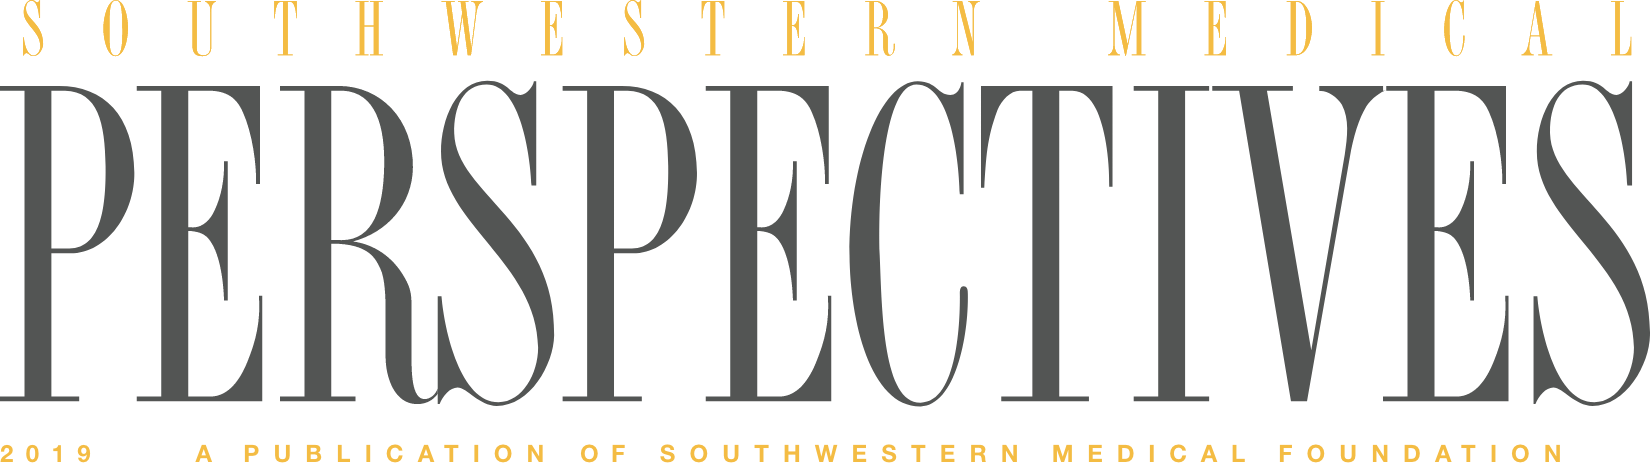 Southwester Medical Perspectives 2019 - A publication of Southwestern Medical Foundation